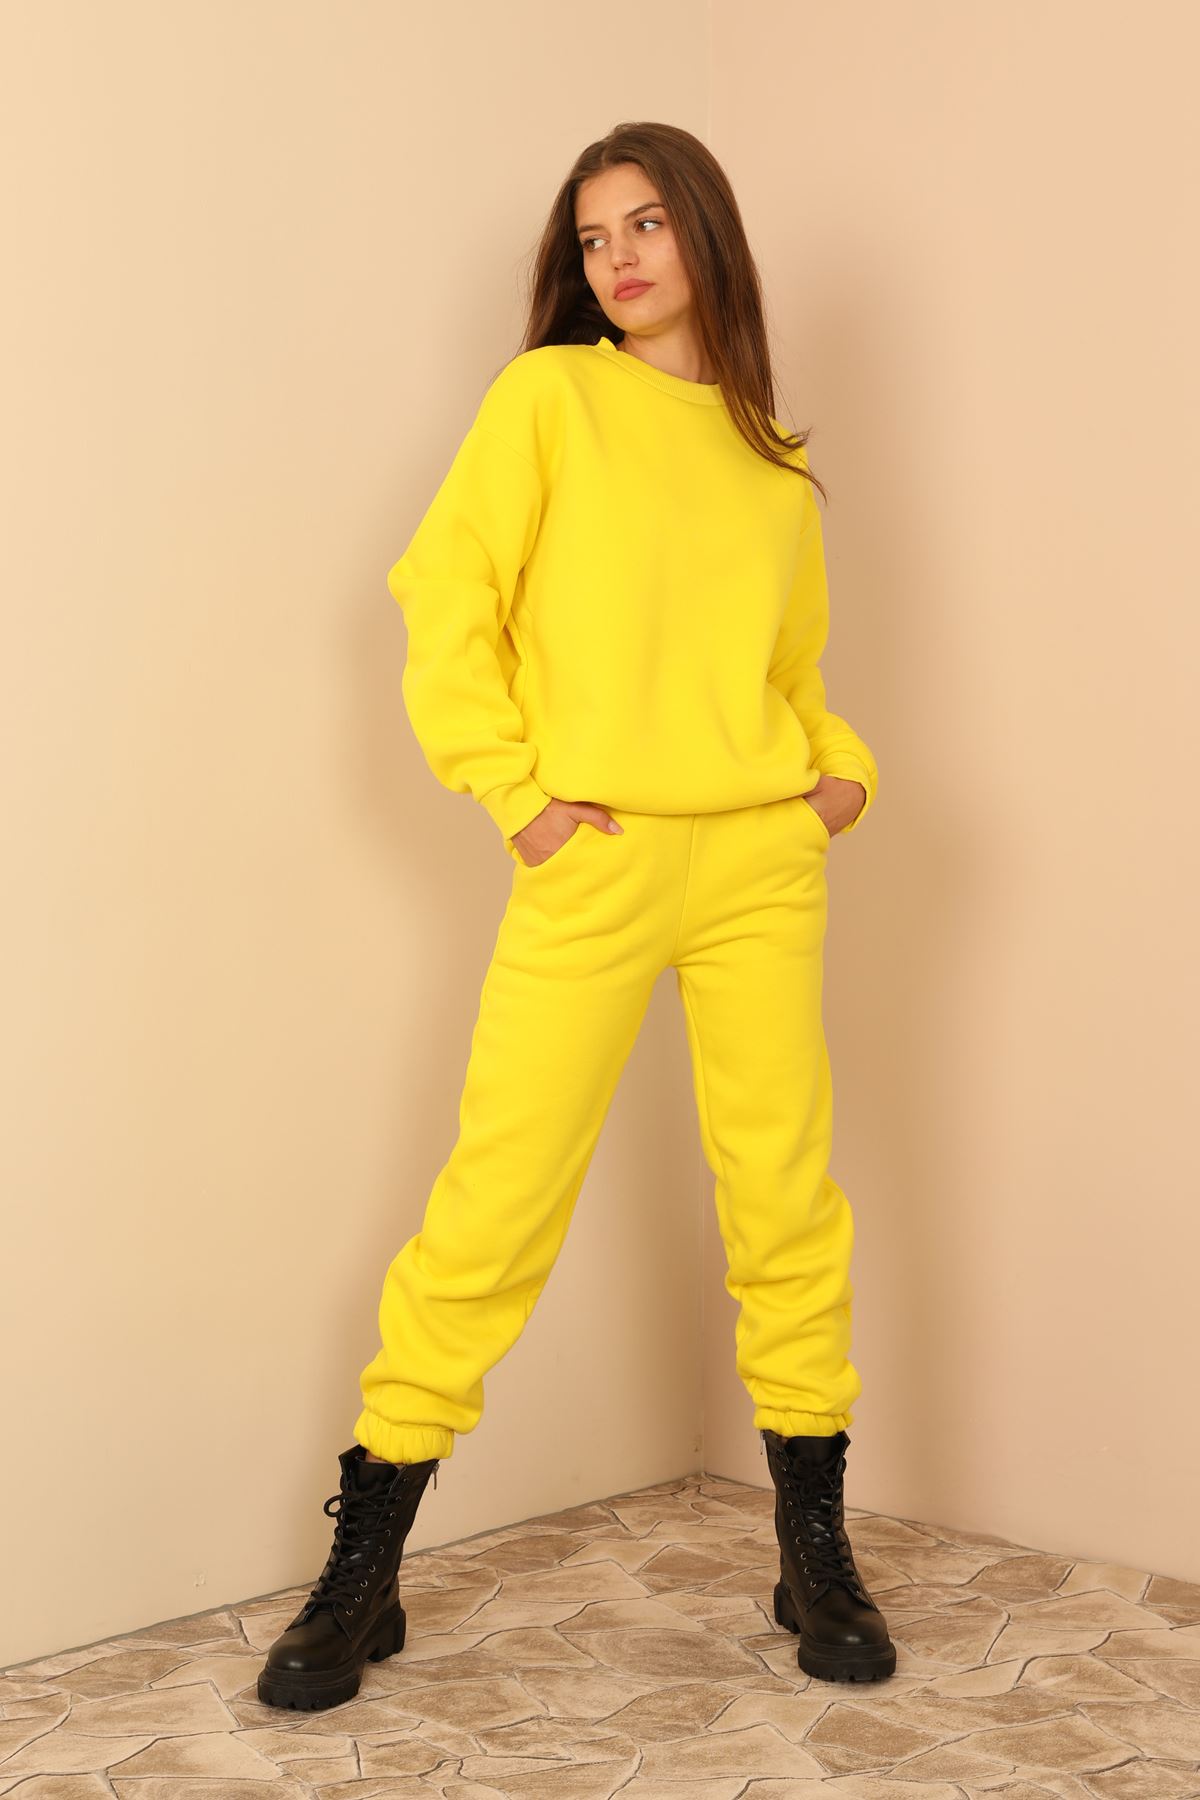 Third Knit With Wool İnside Fabric Long Sleeve Below Hip Women Sweatshirt - Yellow